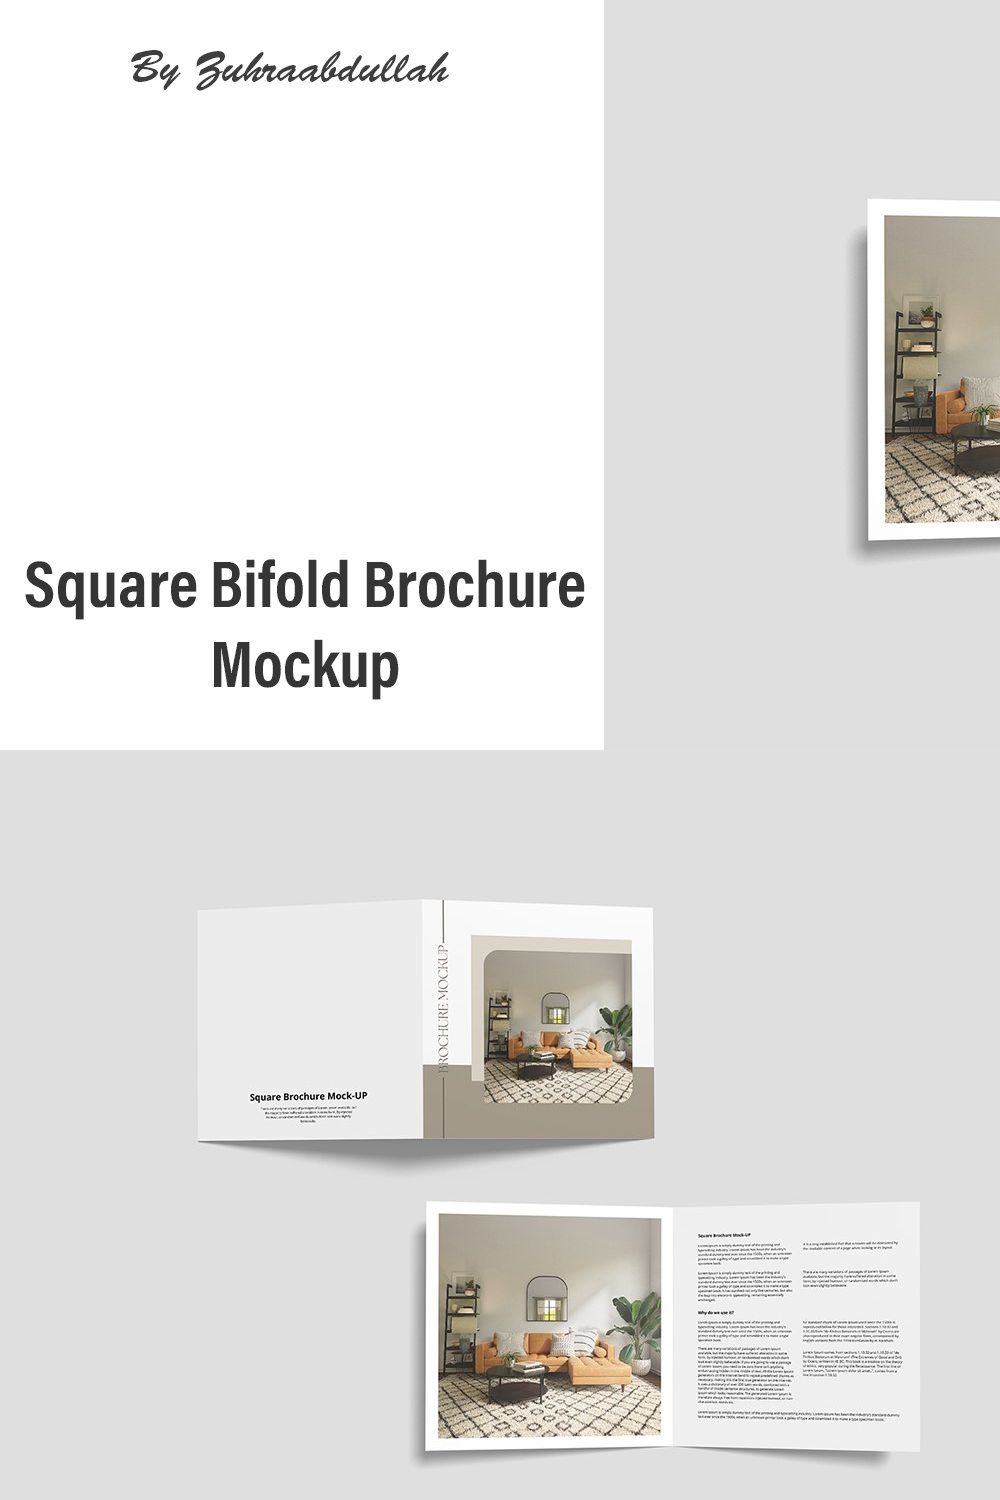 Square Bifold Brochure Mockup pinterest preview image.